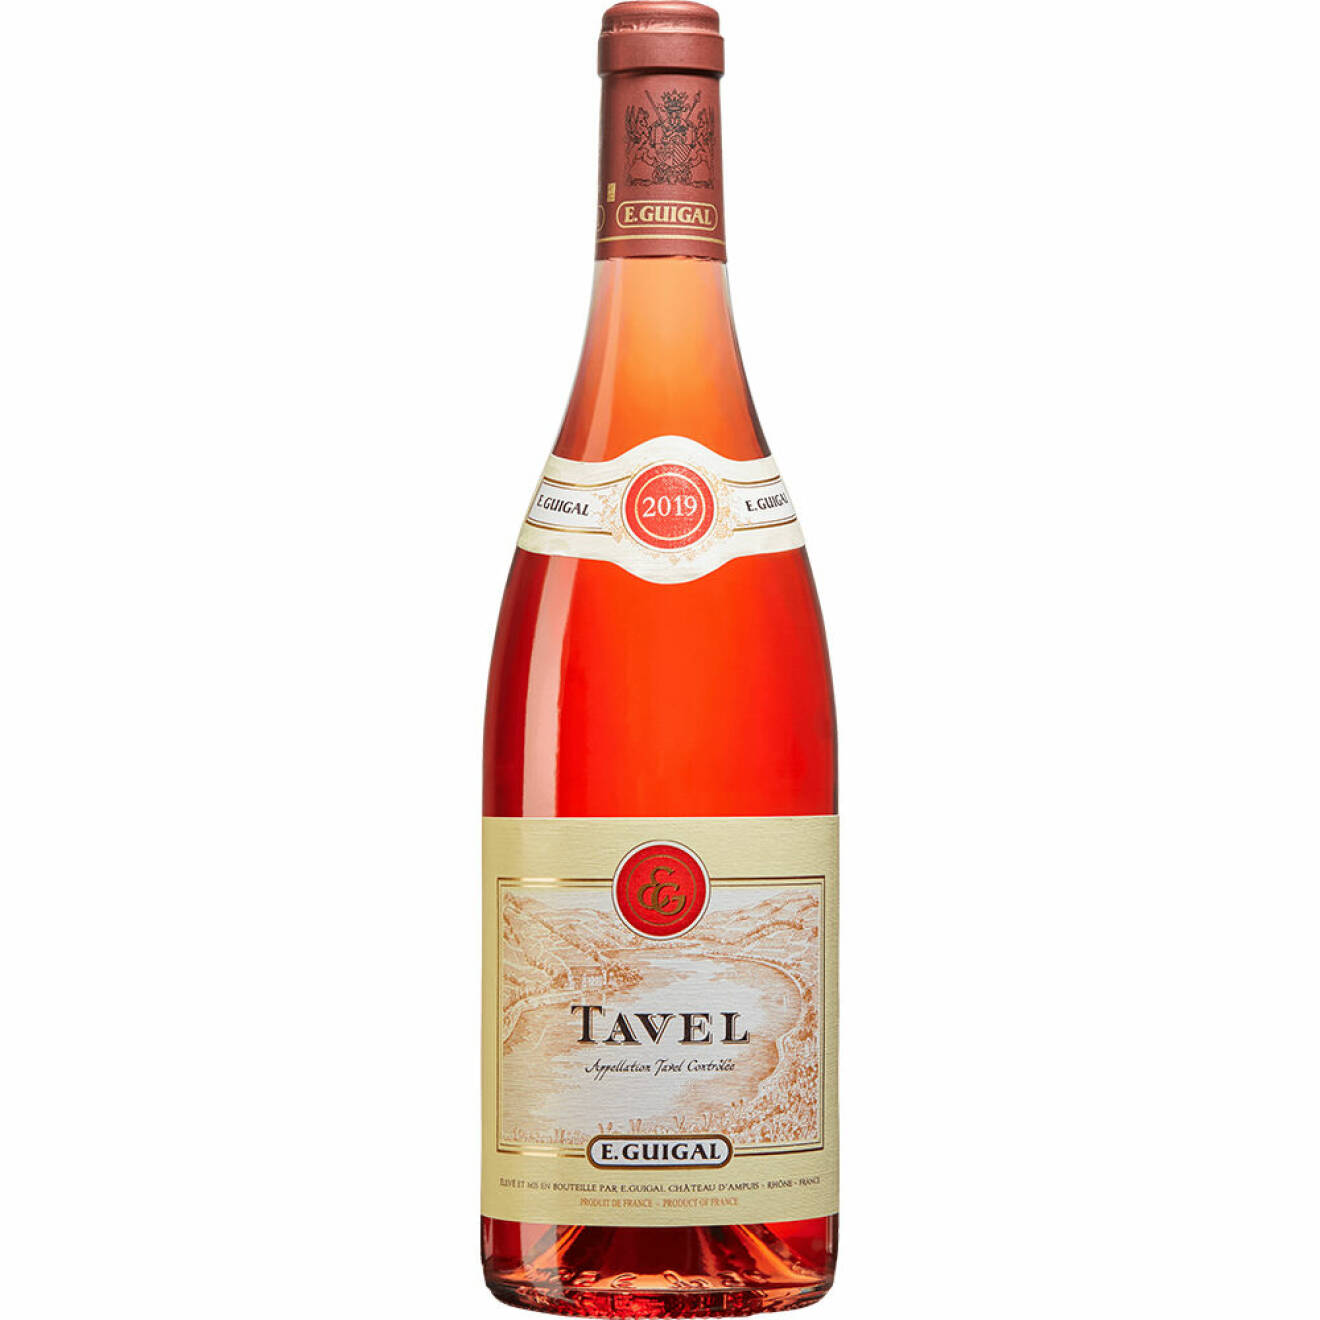 Tavel Rosé E.Guigal 2019, Frankrike, Rhonedalen (55720) 179 kr.